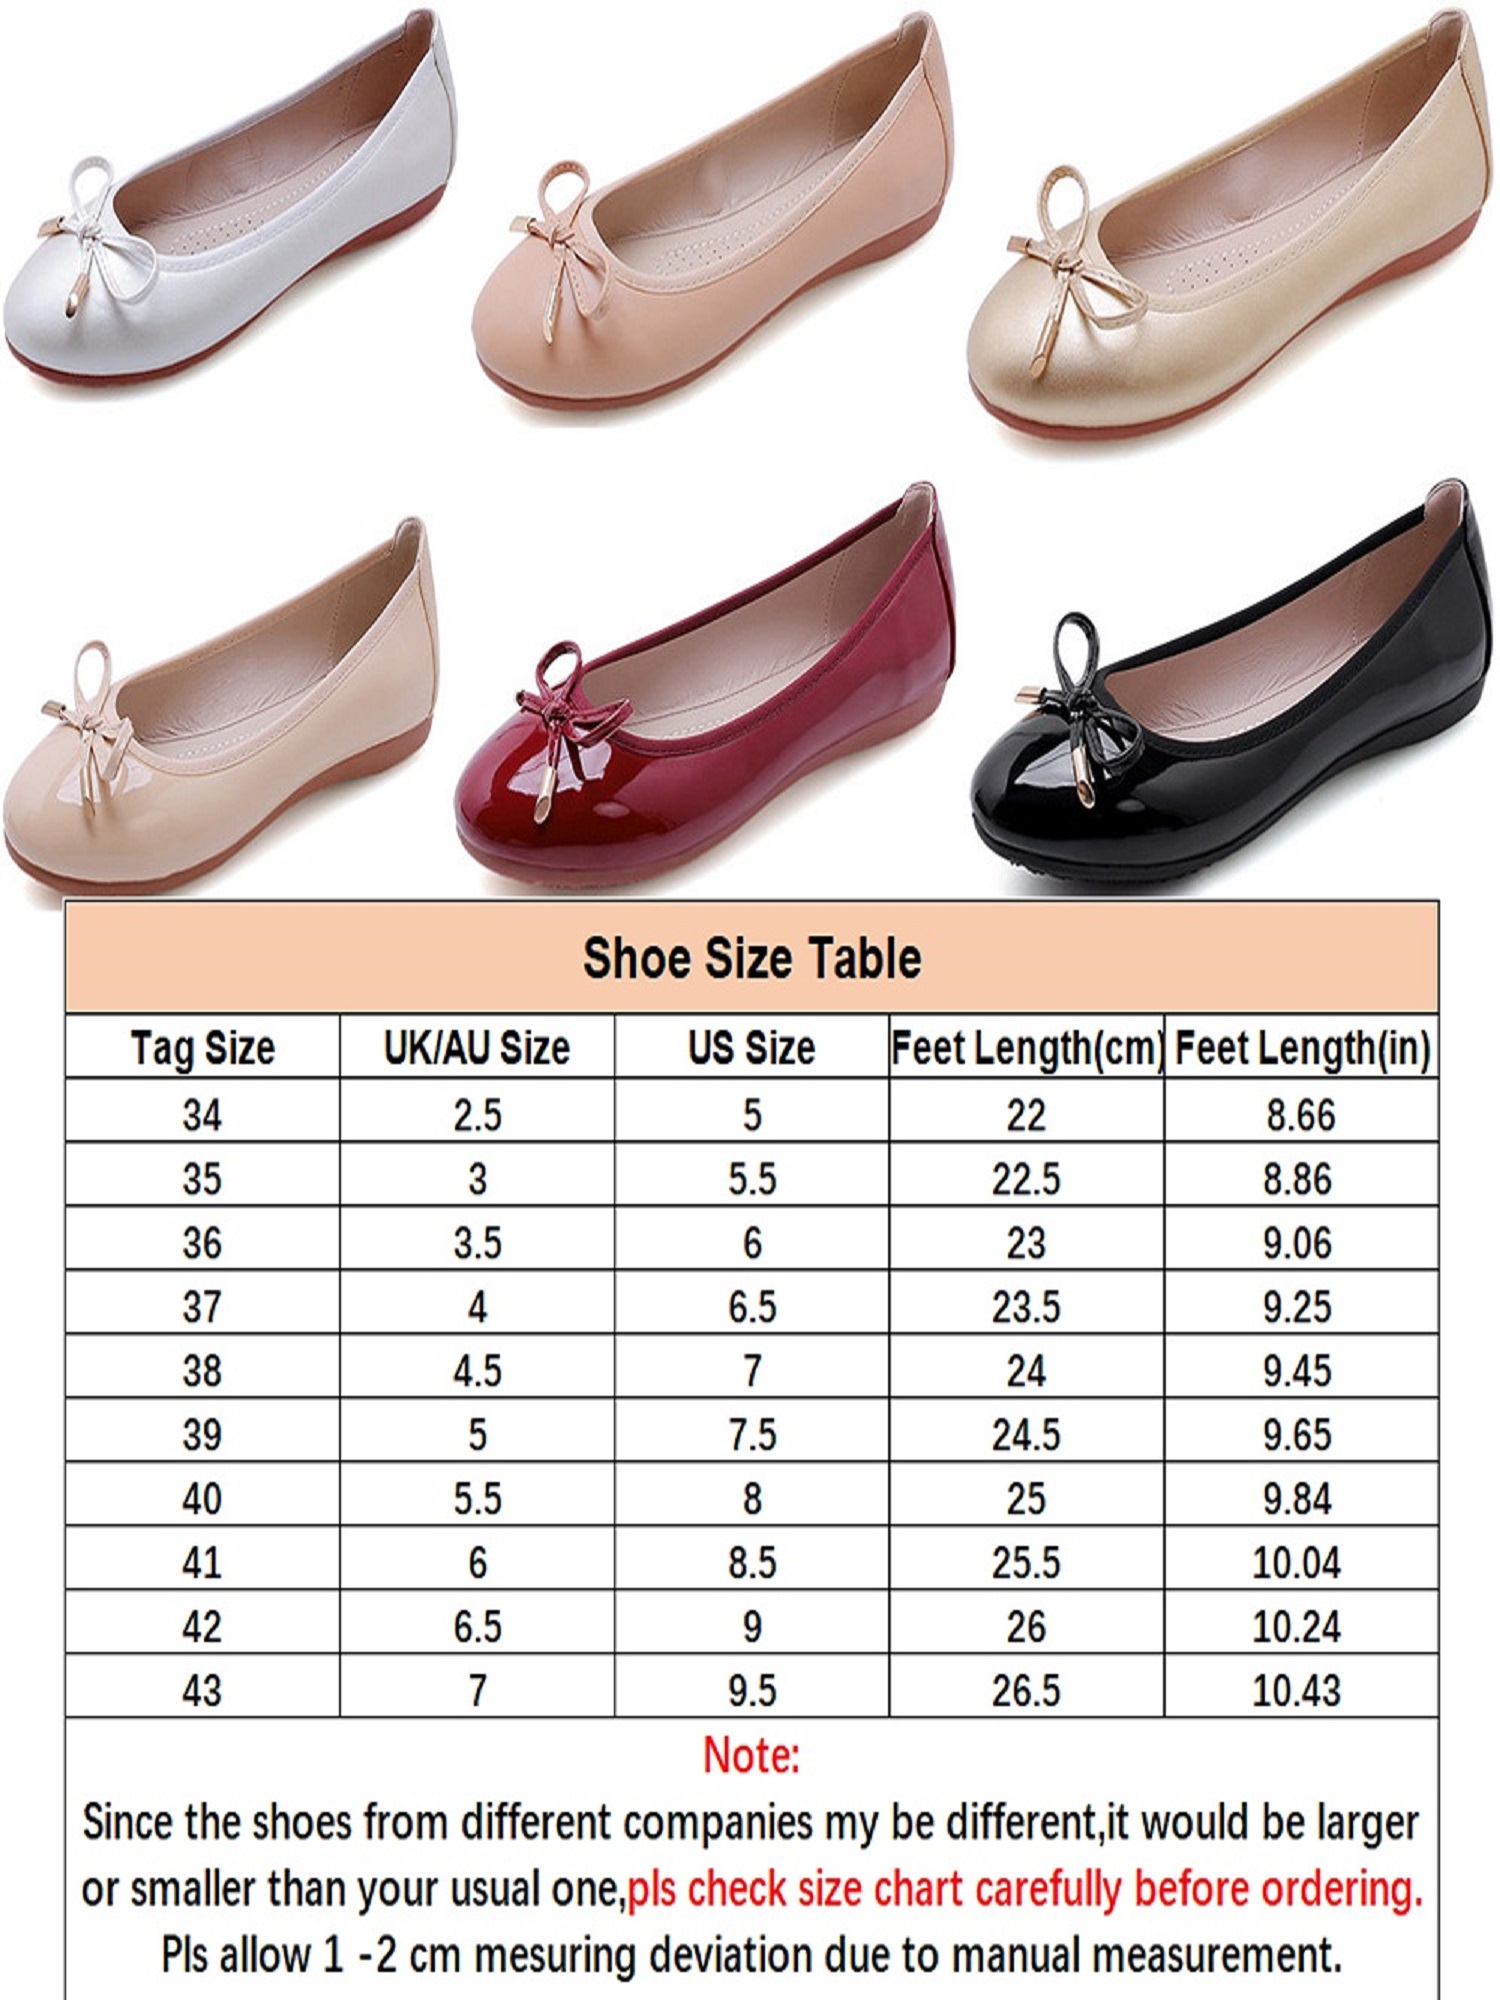 Avamo Women Flat Shoes Comfortable Slip on Round Toe Ballet Flats Casual Walking Shoes - image 2 of 3